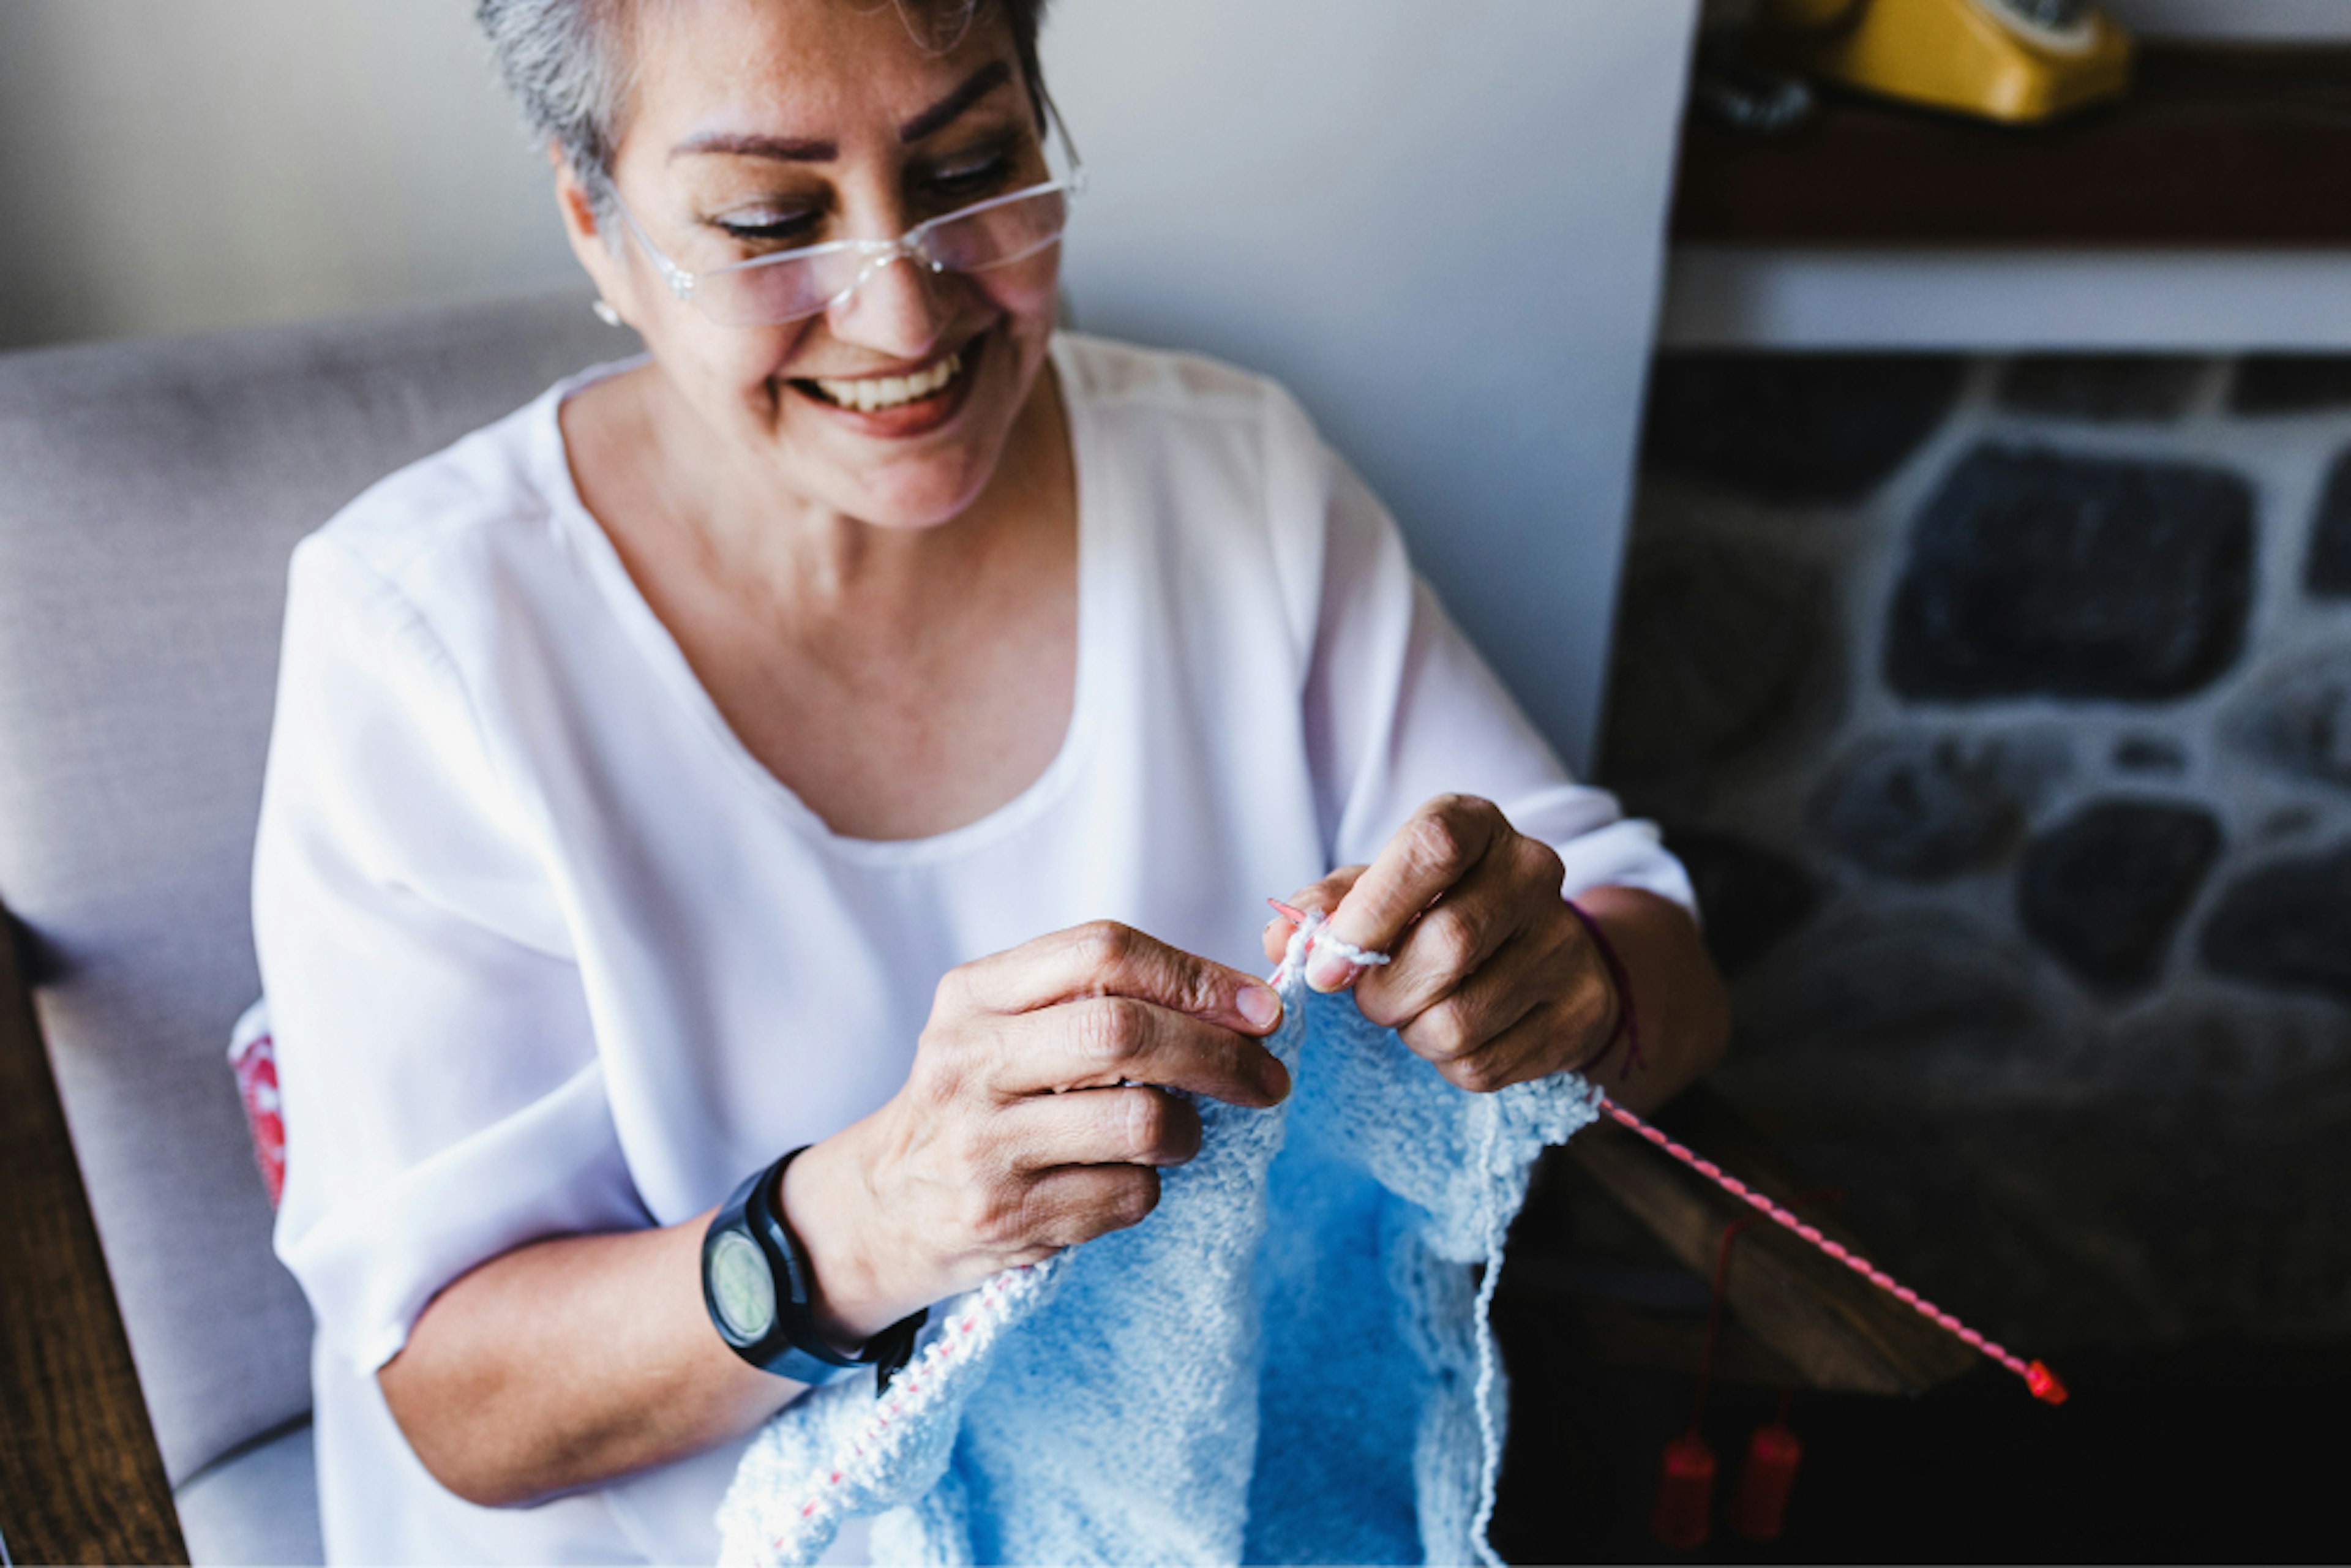 Woman smiling while knitting.